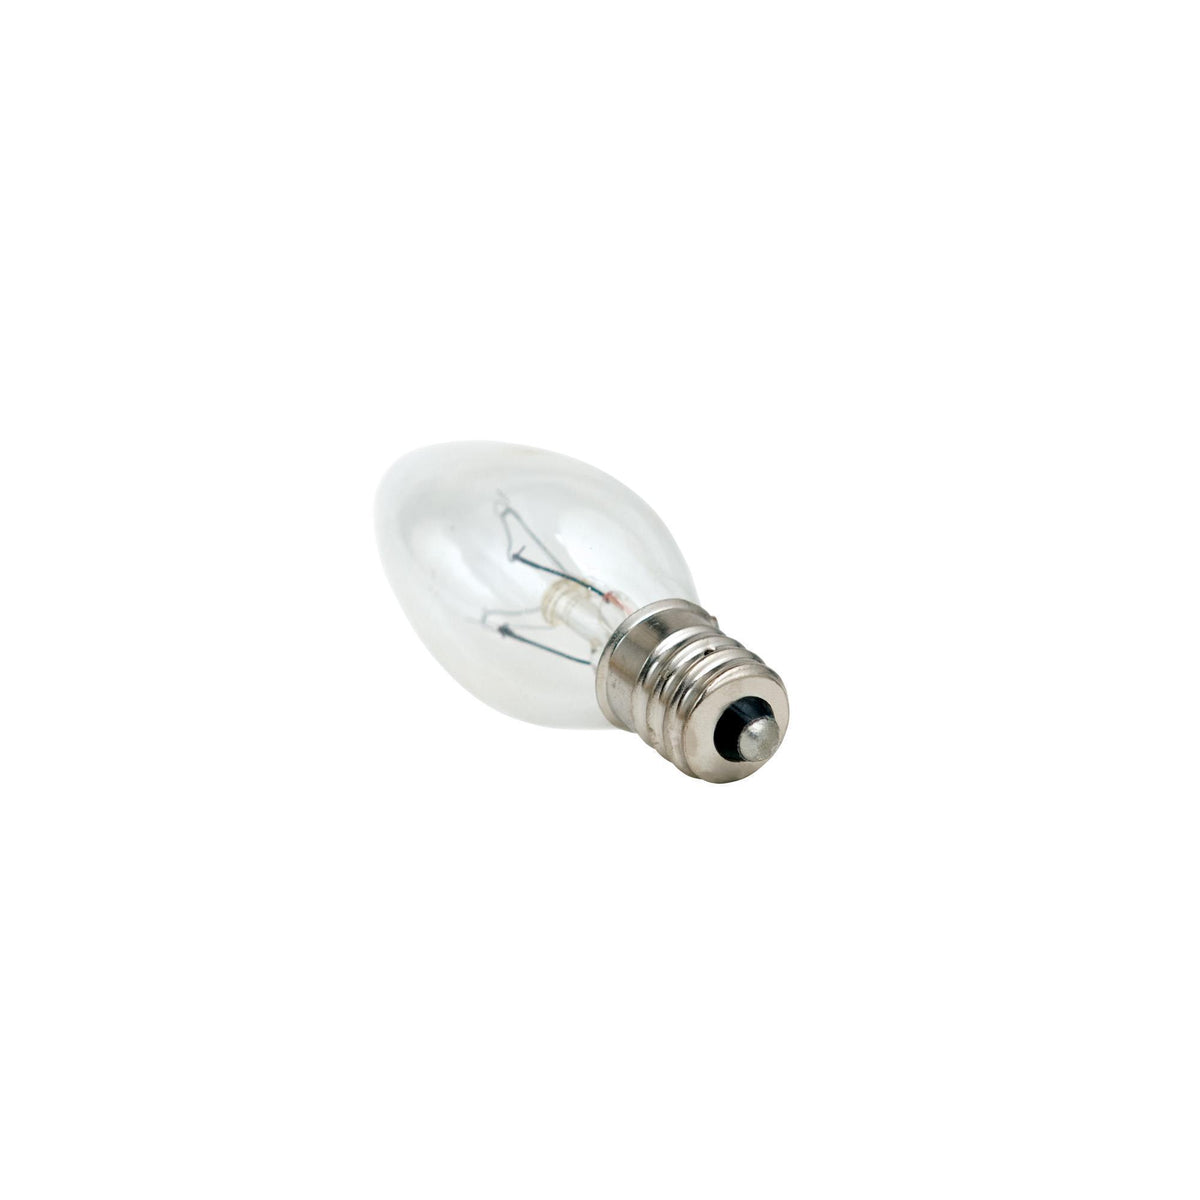 Salt Lamp Replacement Bulb, 15W